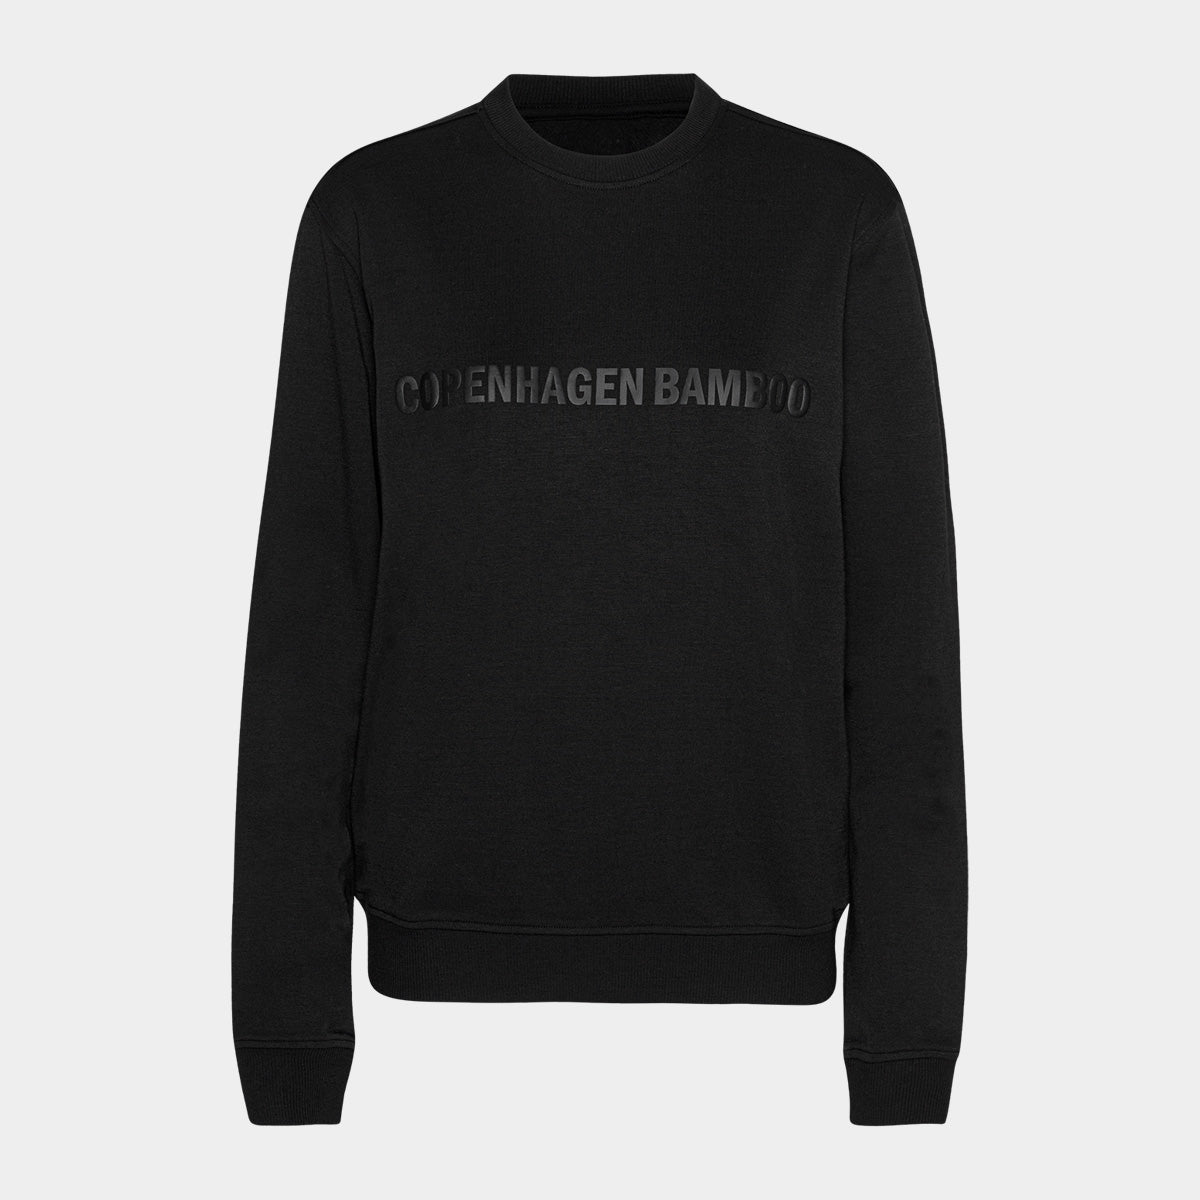 Se Sort bambus sweatshirt til mænd med logo fra Copenhagen Bamboo, M hos Bambustøj.dk